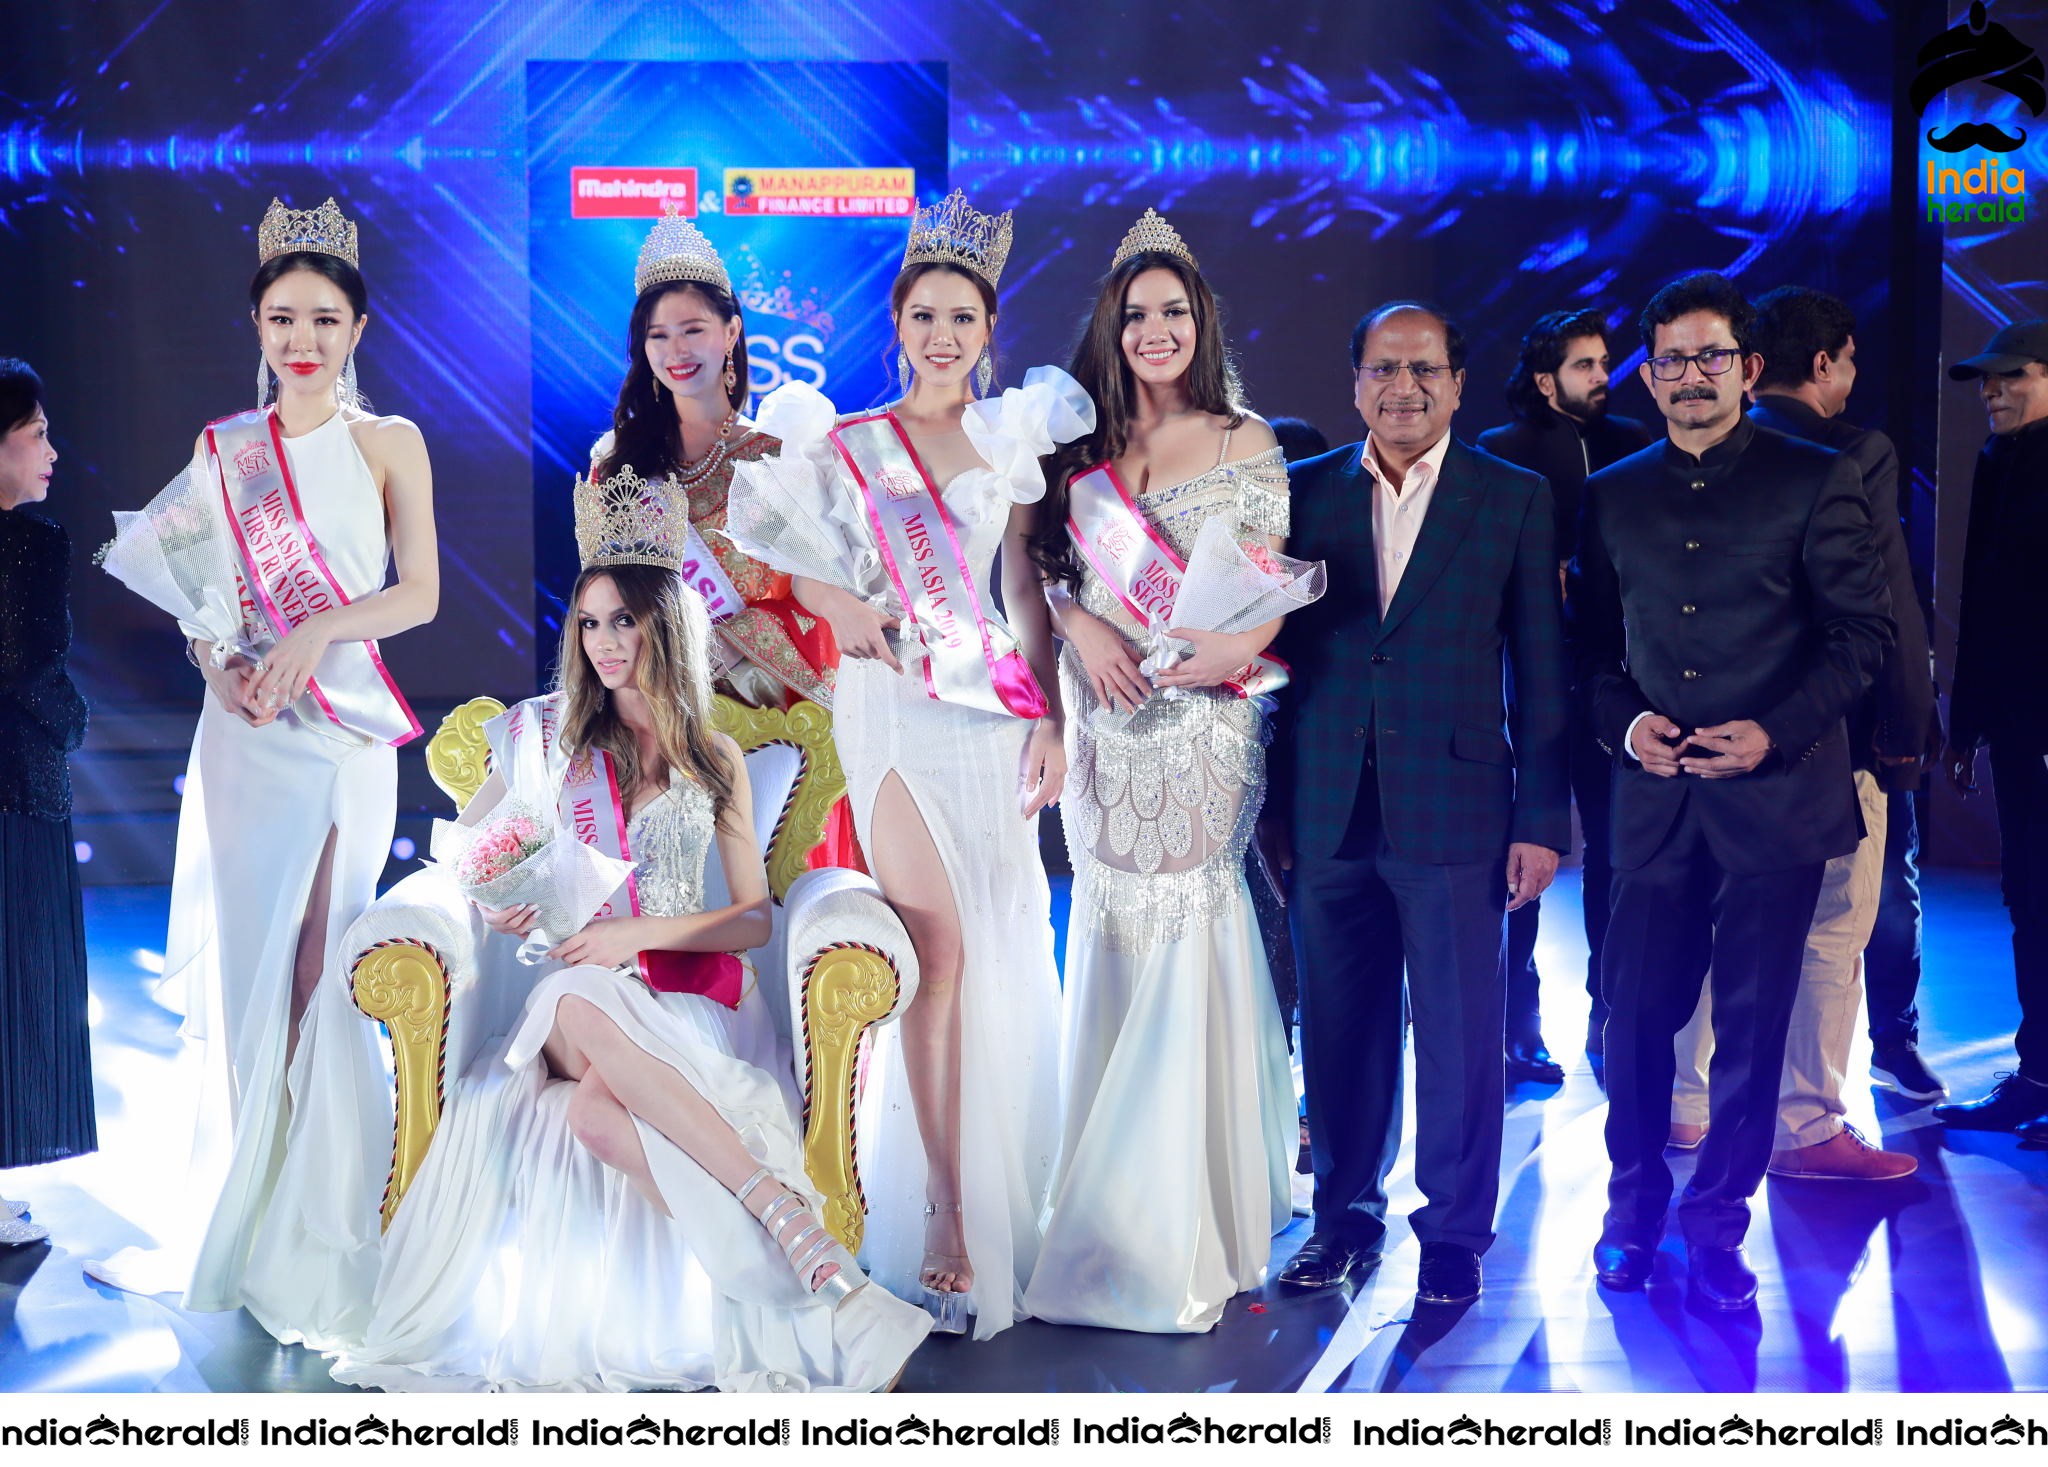 Mahindra And Manappuram Miss Asia Global 2019 Grand Final Fashion Show Set 5